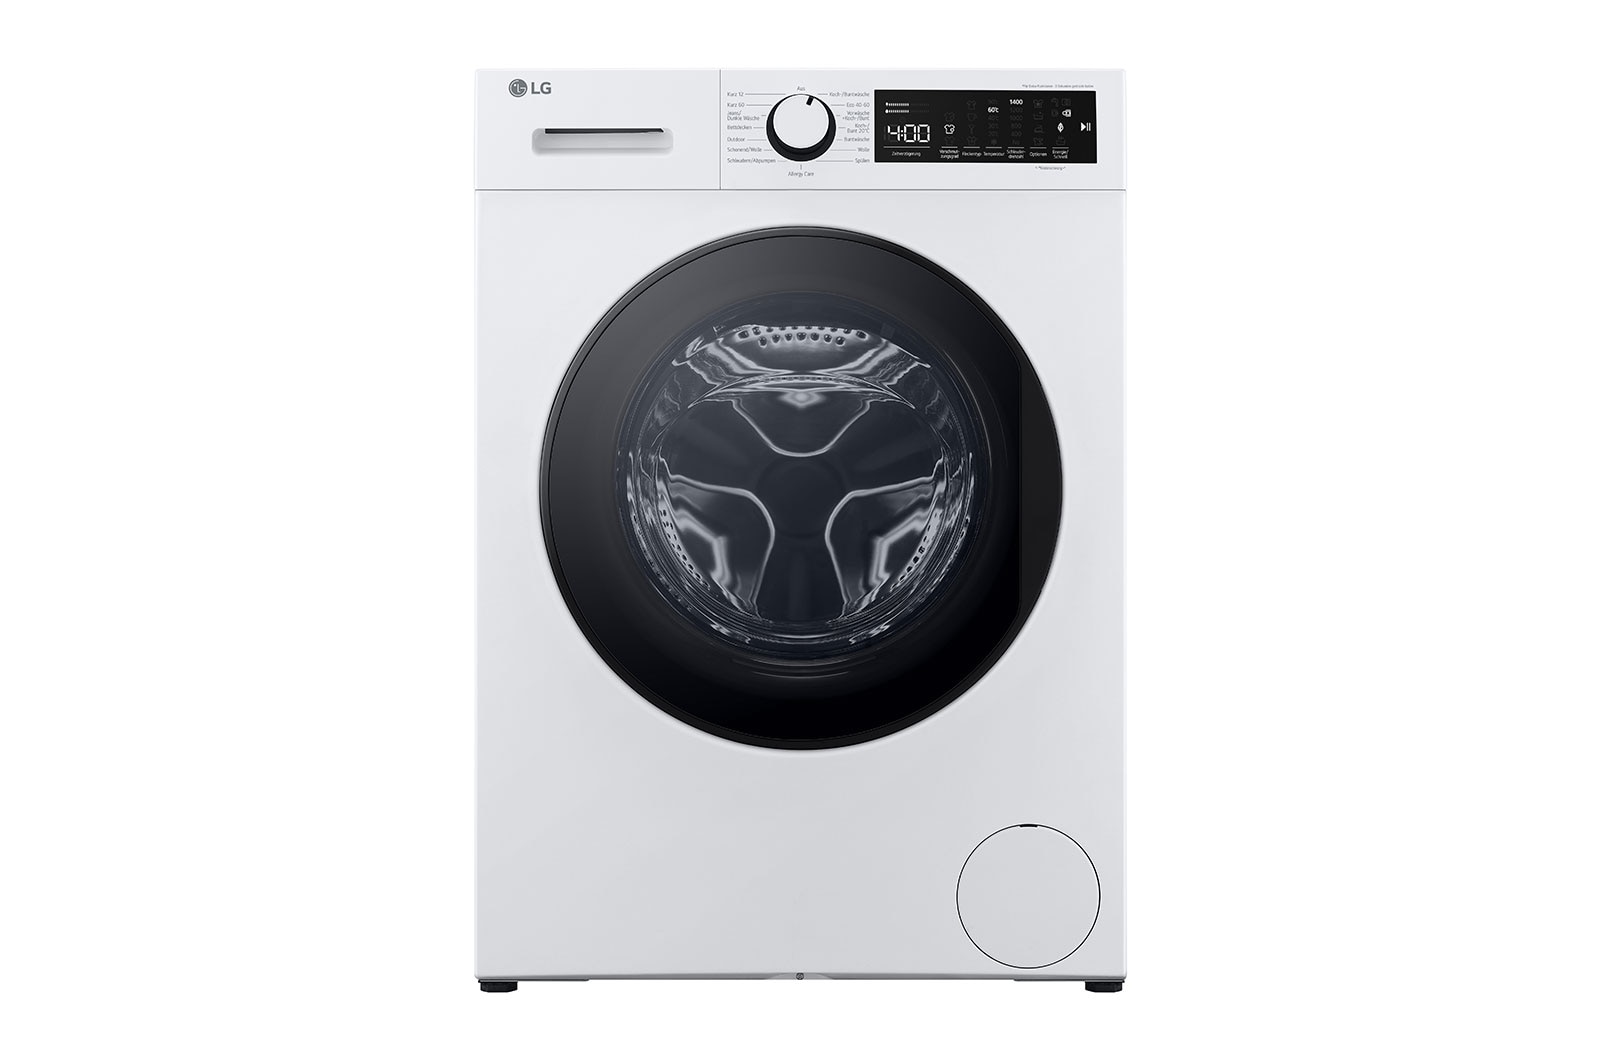 LG Waschmaschine mit 9 kg Kapazität | Energieeffizienzklasse A | 1.400 U/Min. | Weiß mit weißem Bullaugenring | LG F4WN3098M, F4WN3098M, F4WN3098M